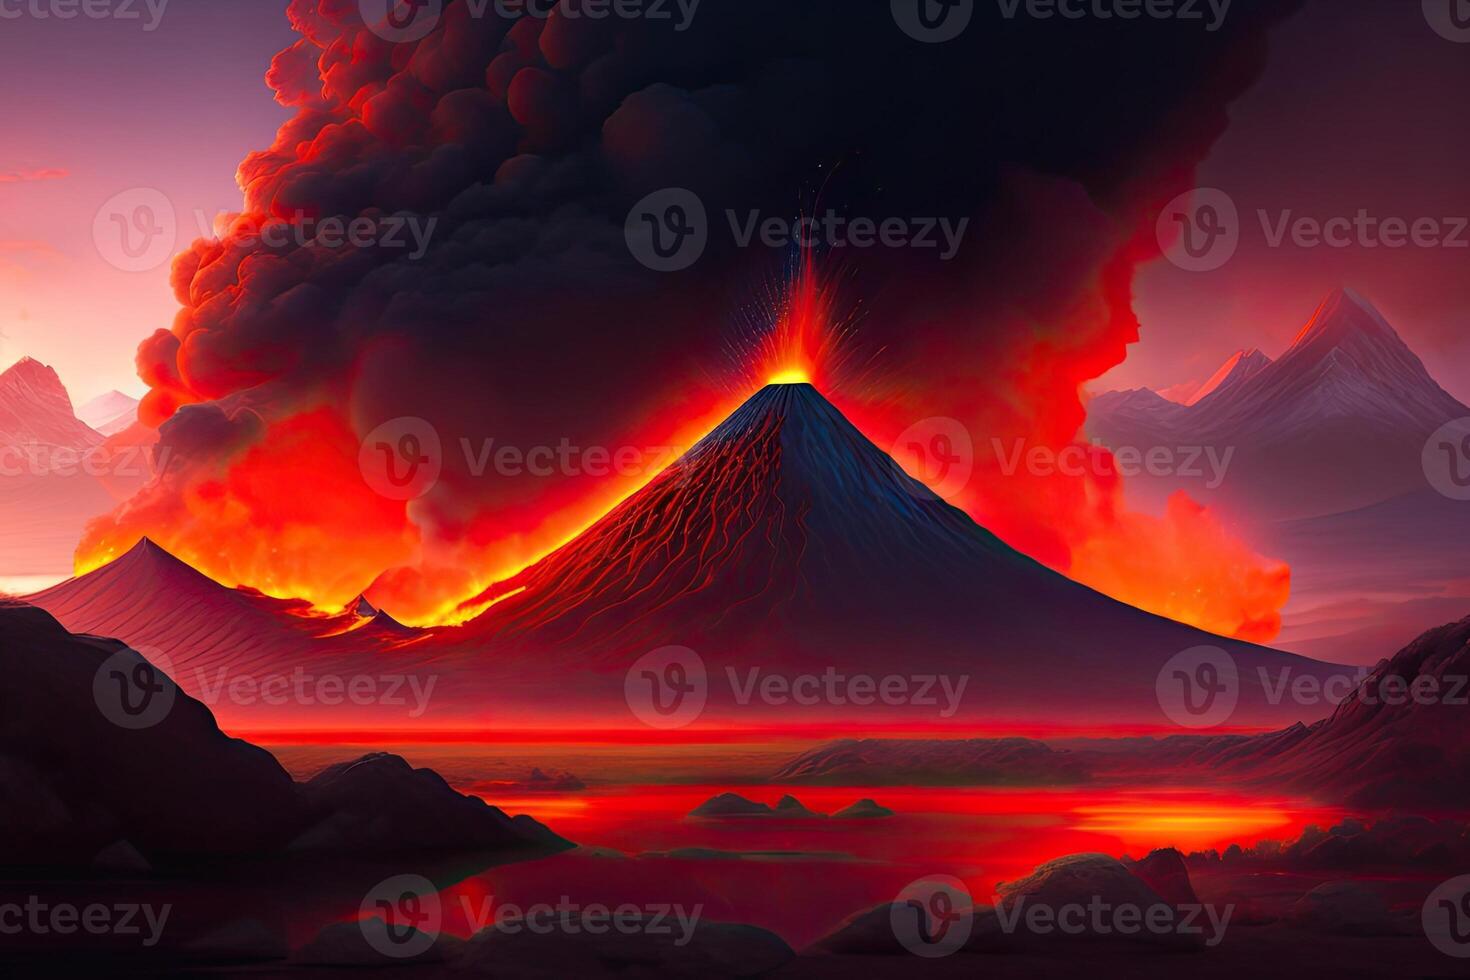 Volcano Eruption with Lava photo